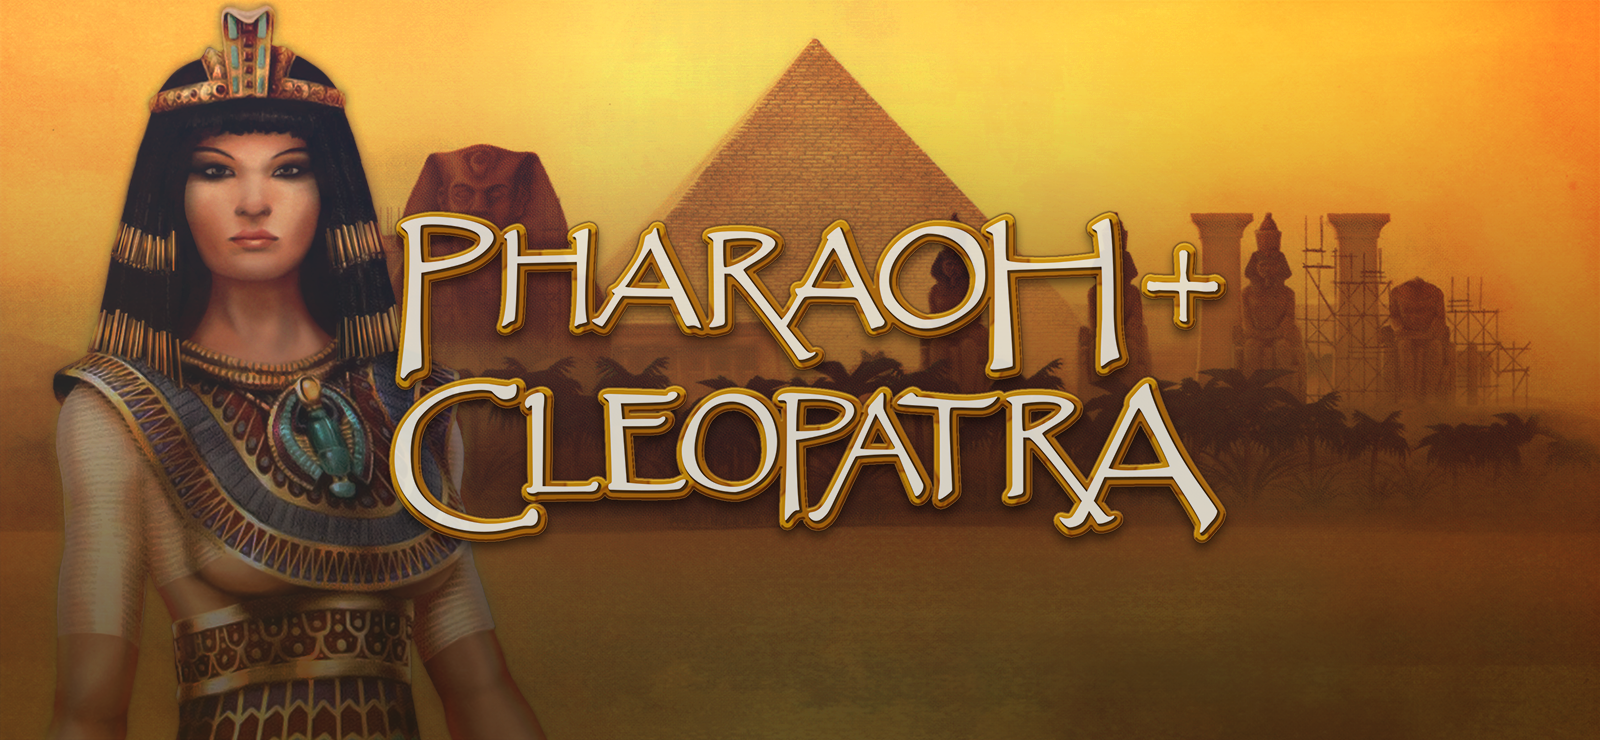 BESTSELLER - Pharaoh + Cleopatra